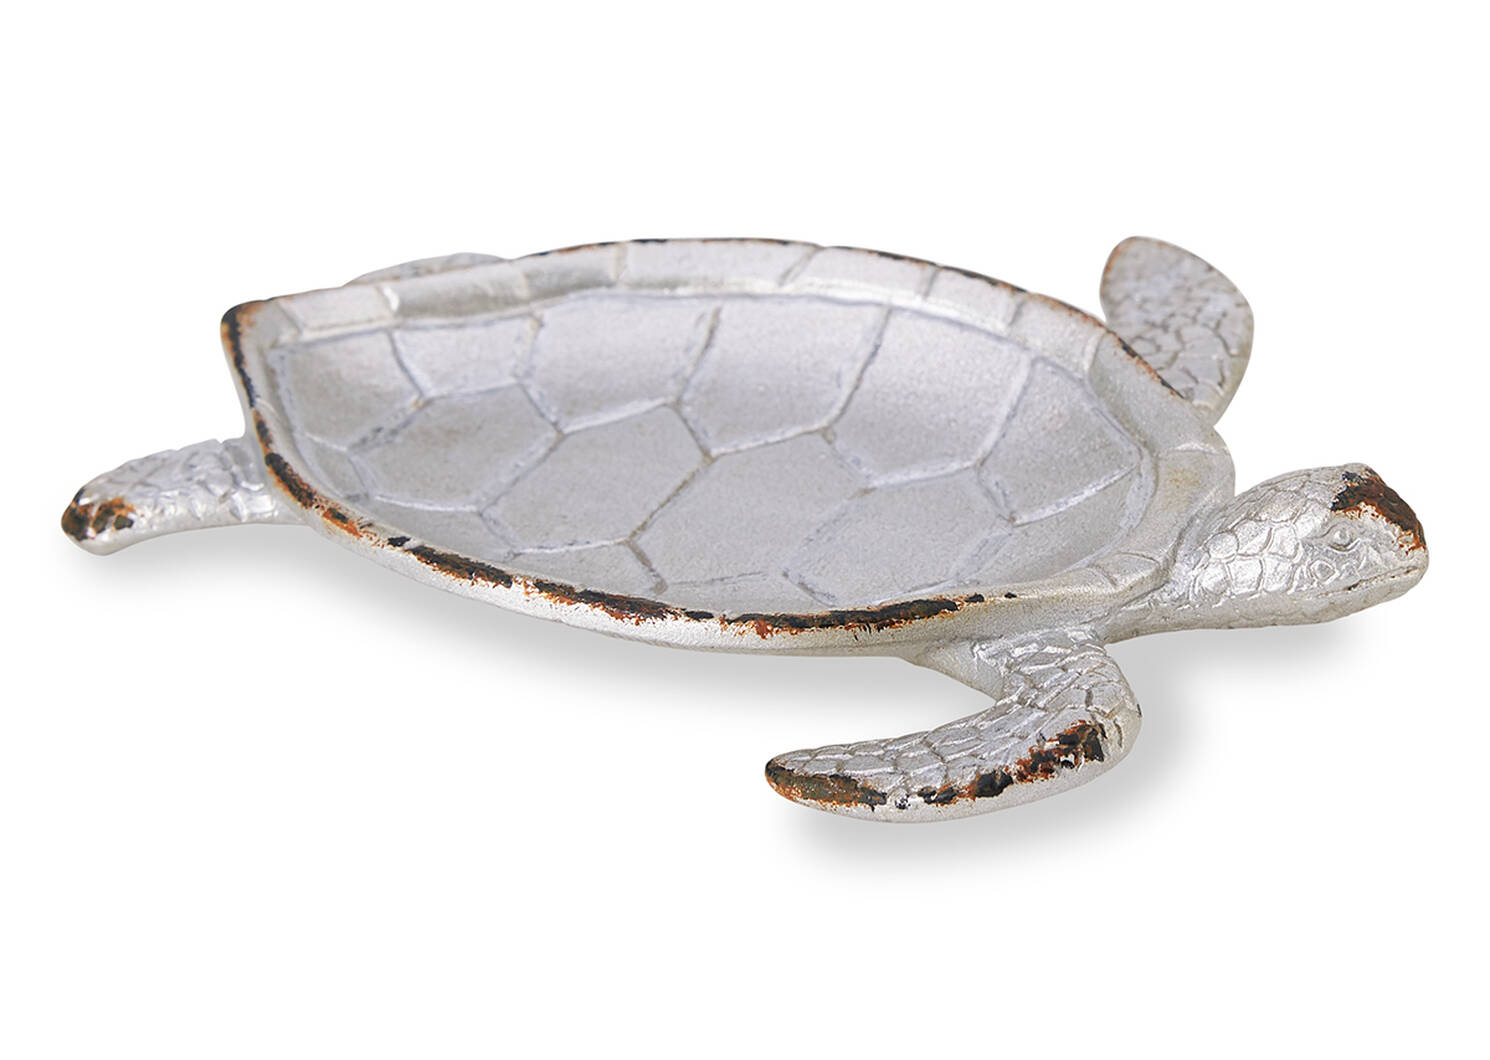 Ridley Turtle Jewelry Dish